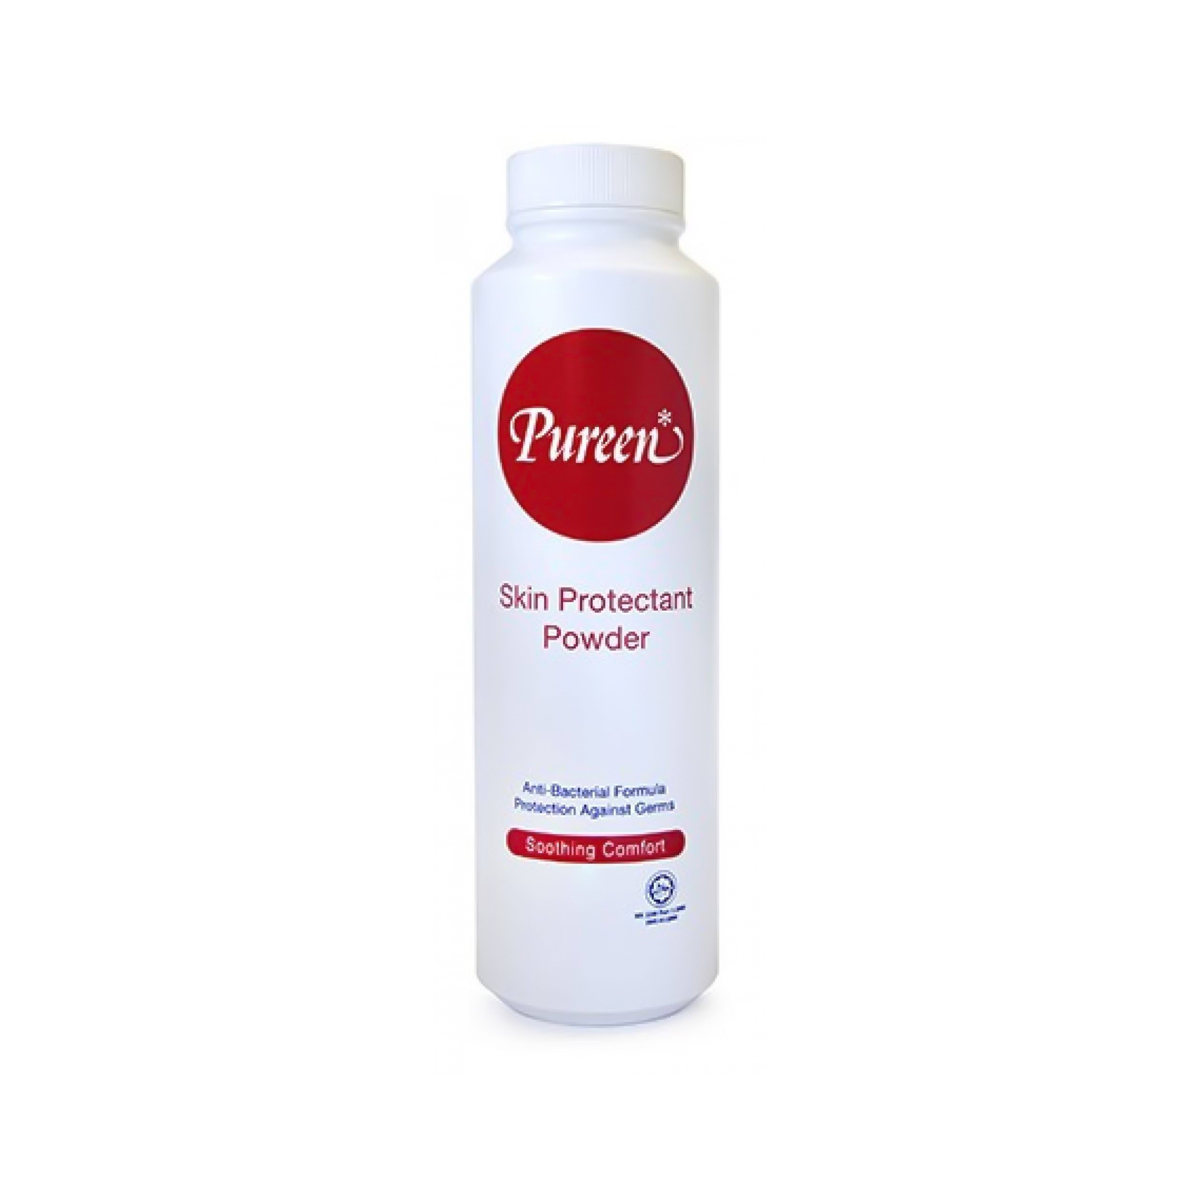 Pureen Skin Protectant Powder 100g